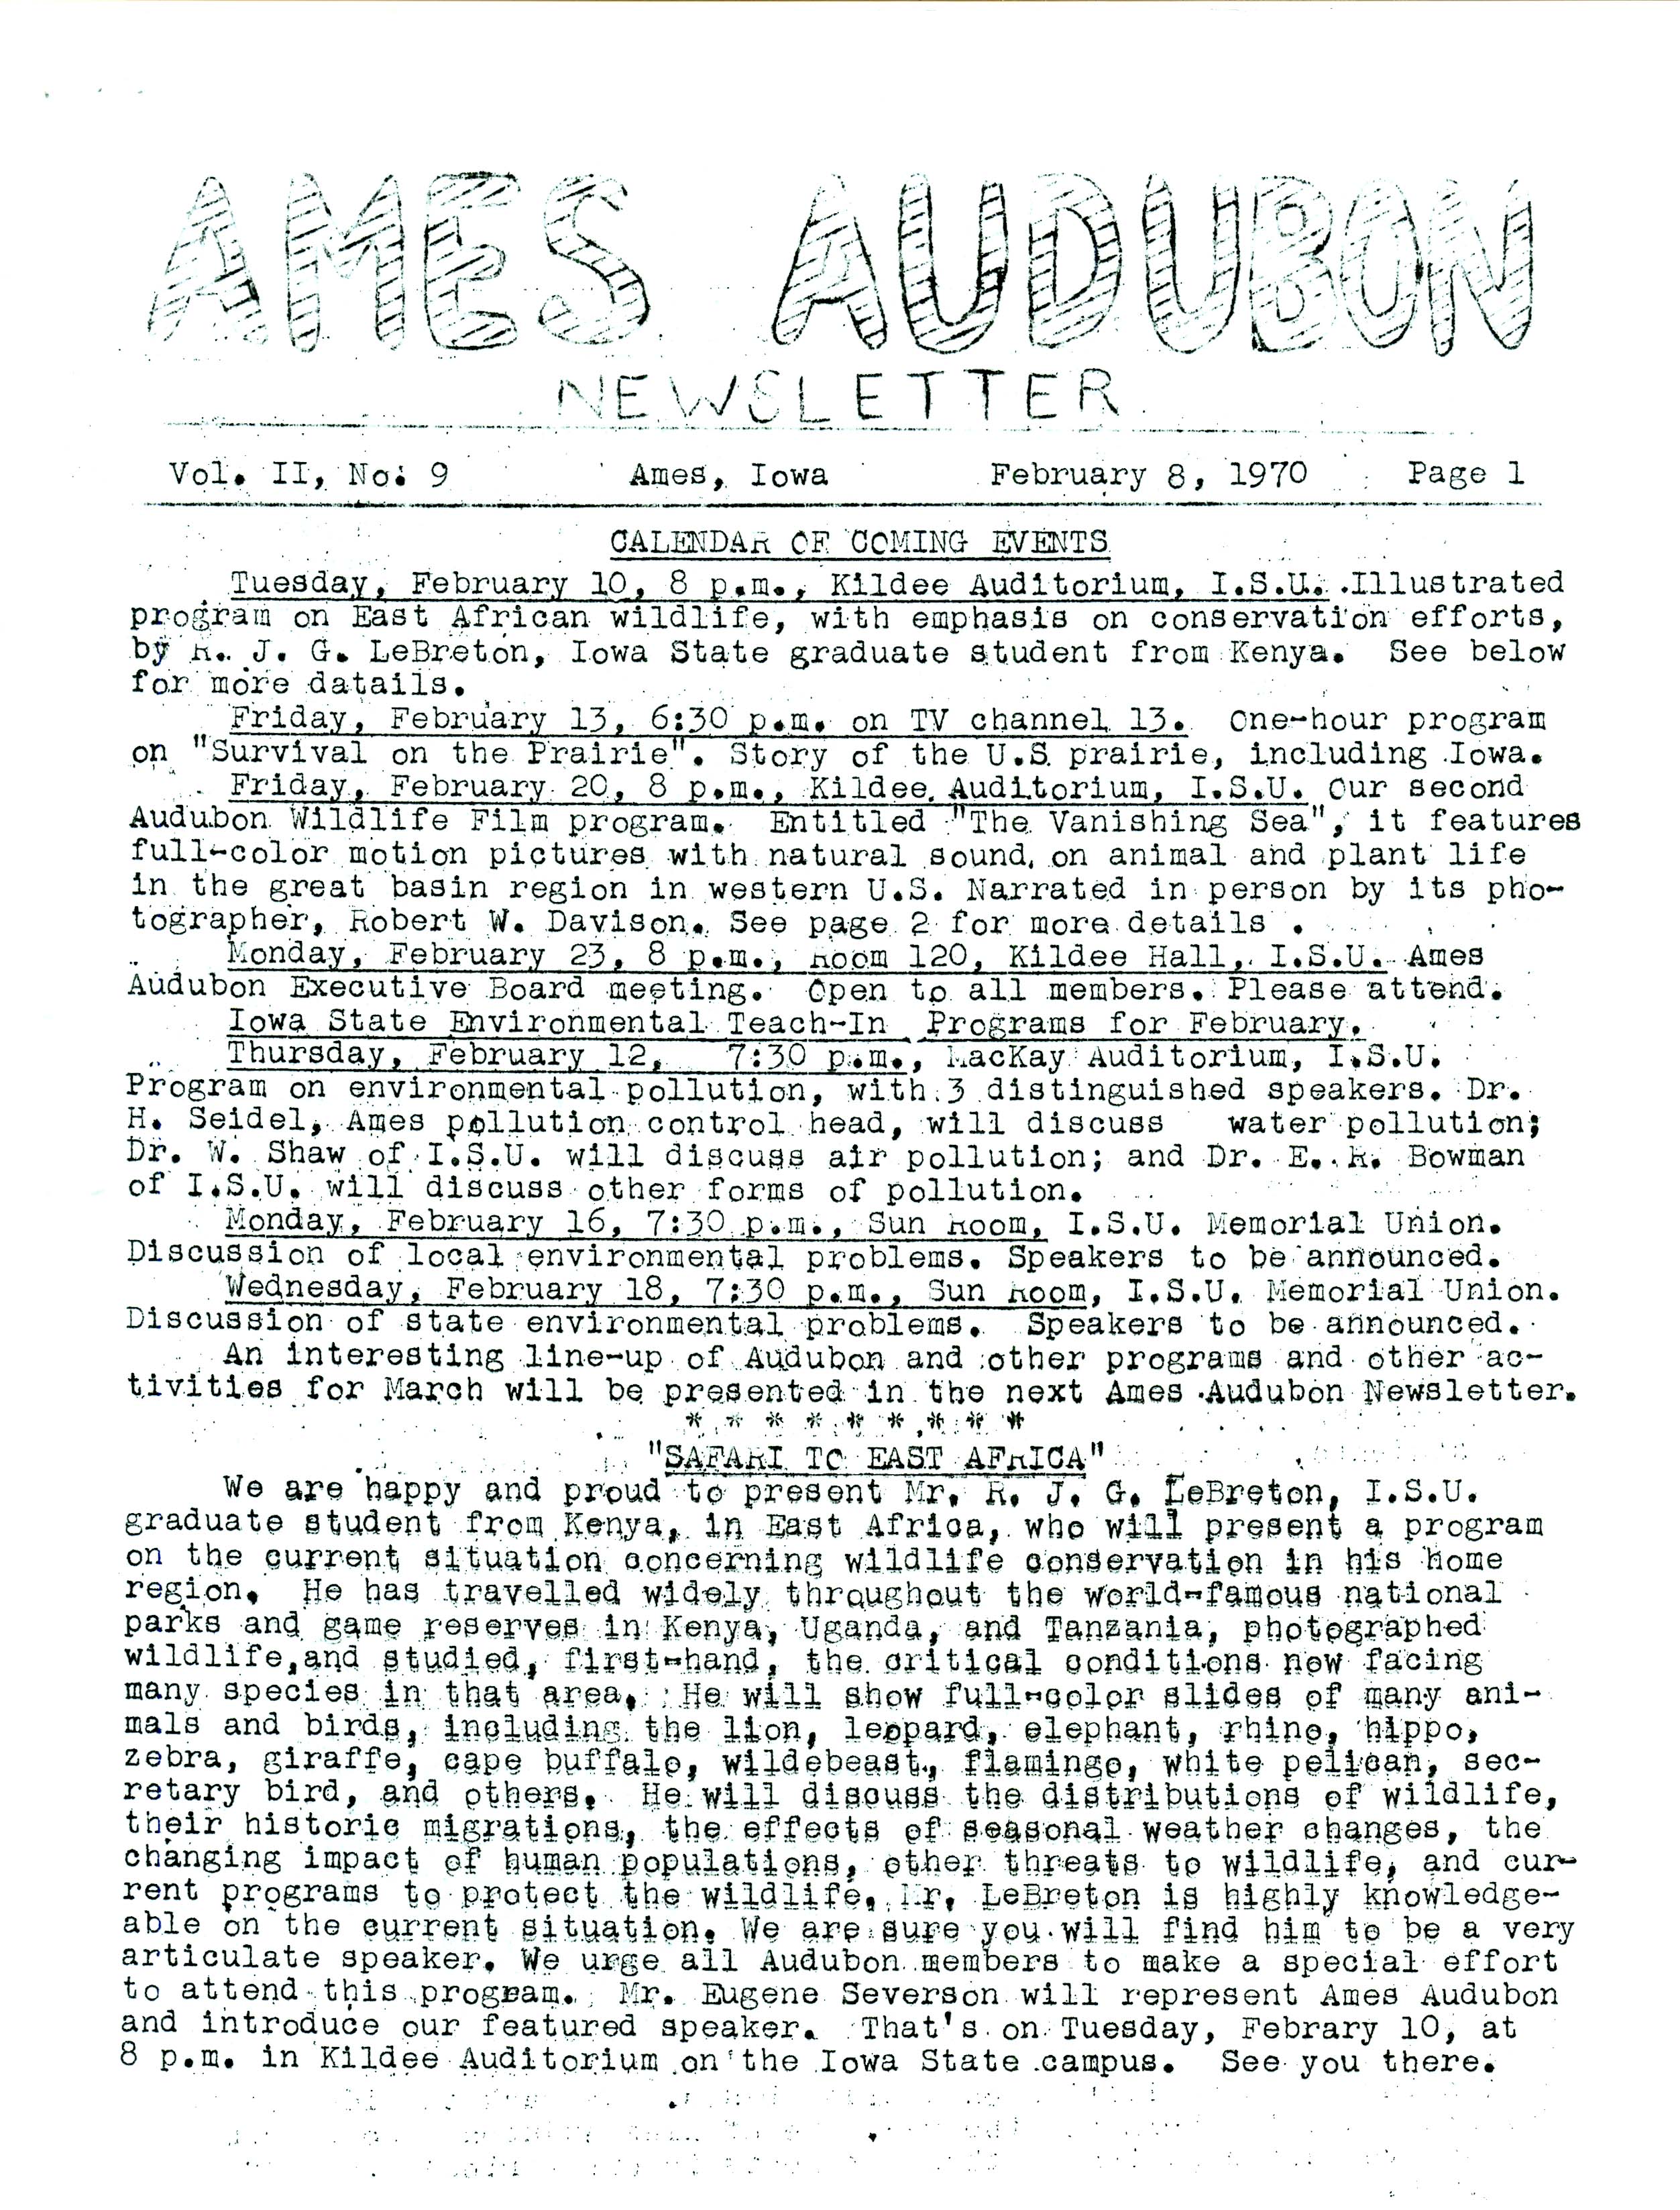 Ames Audubon Newsletter, Volume 2, Number 9, February 8, 1970 